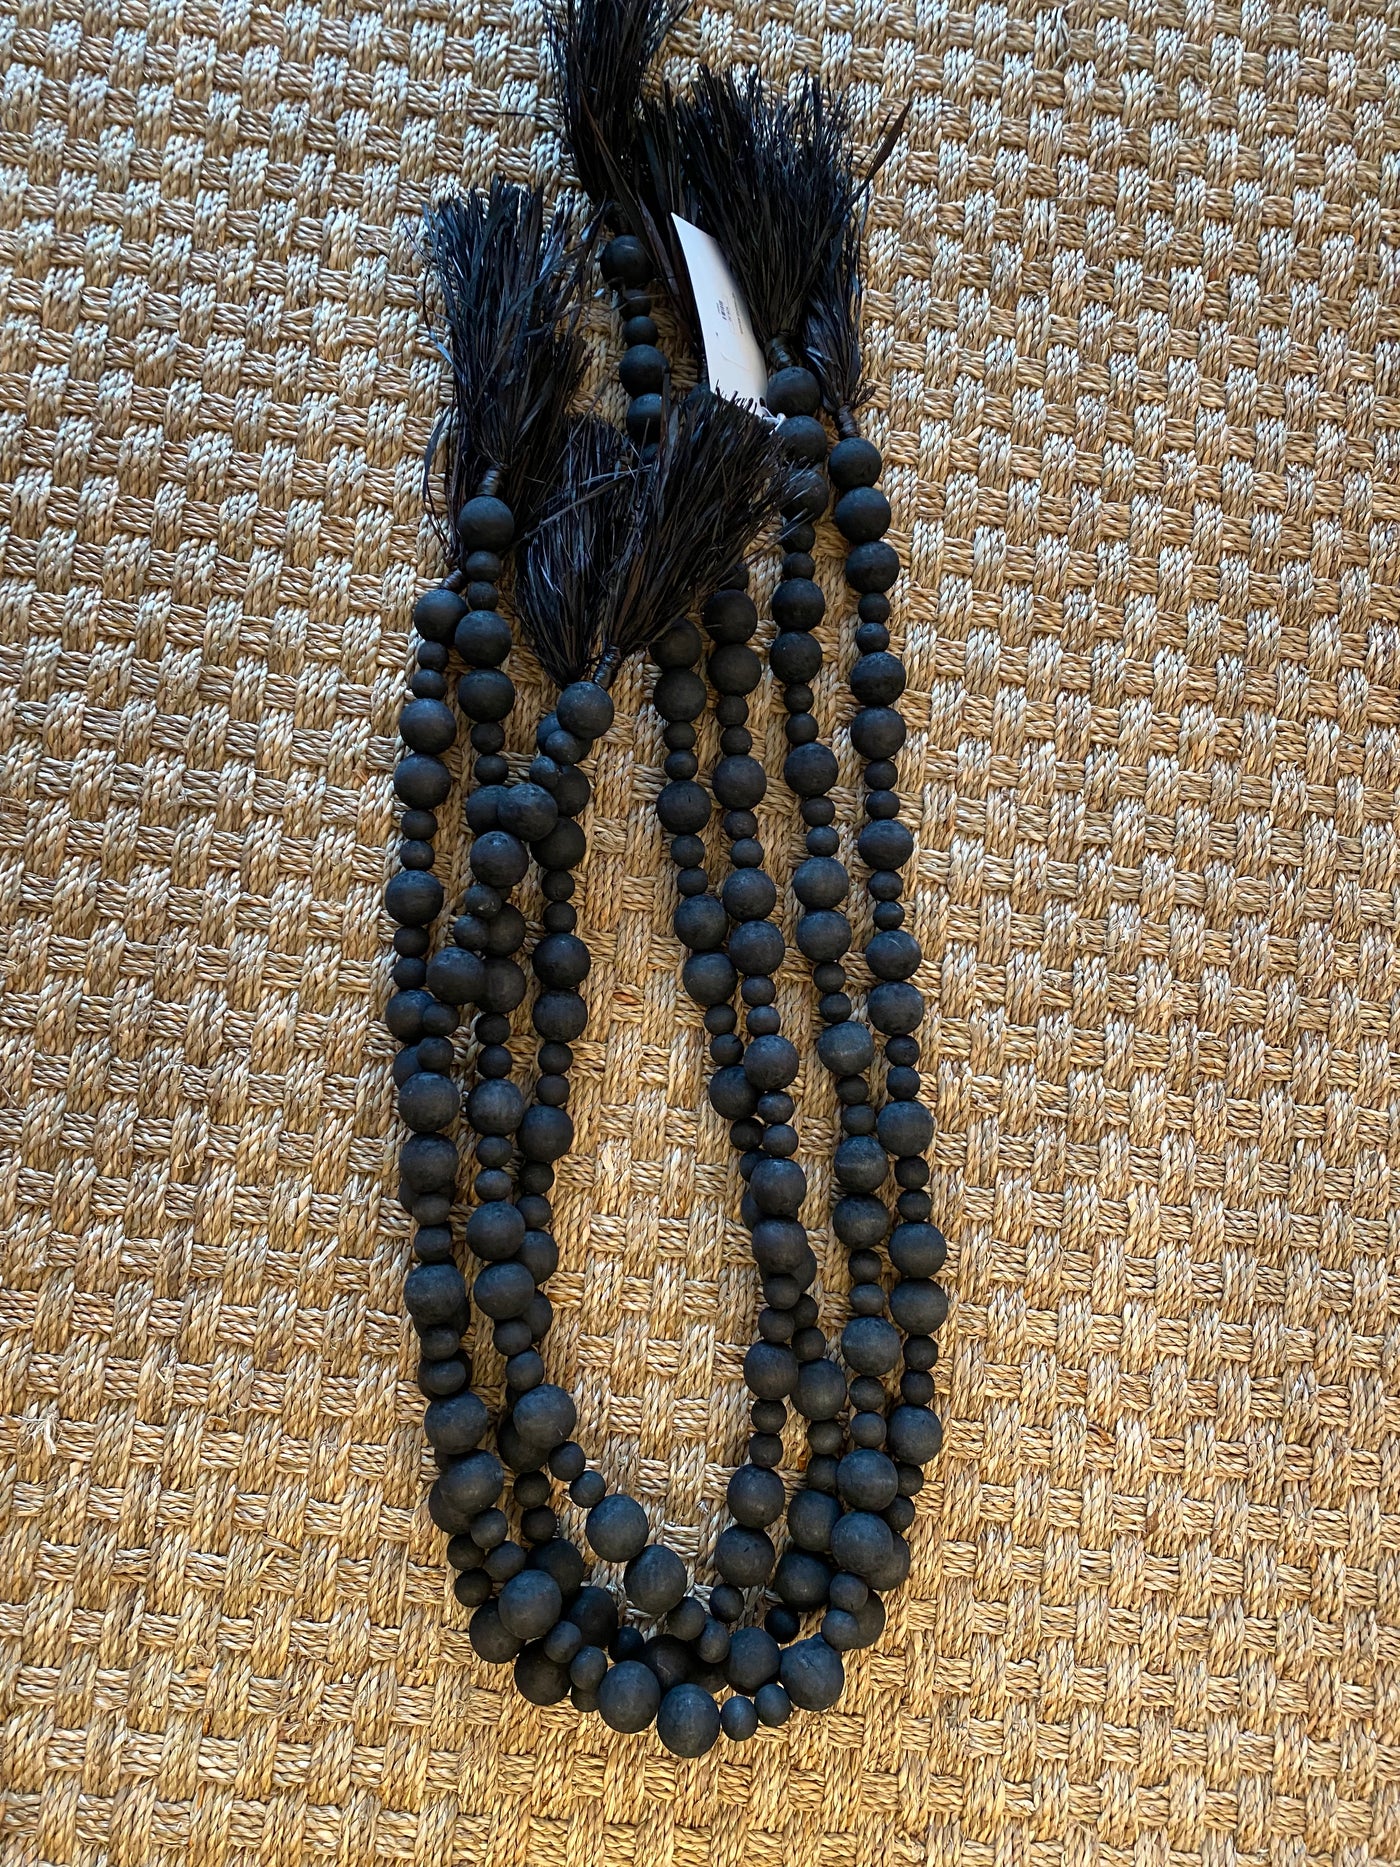 Black wooden bead strand with raffia fringe